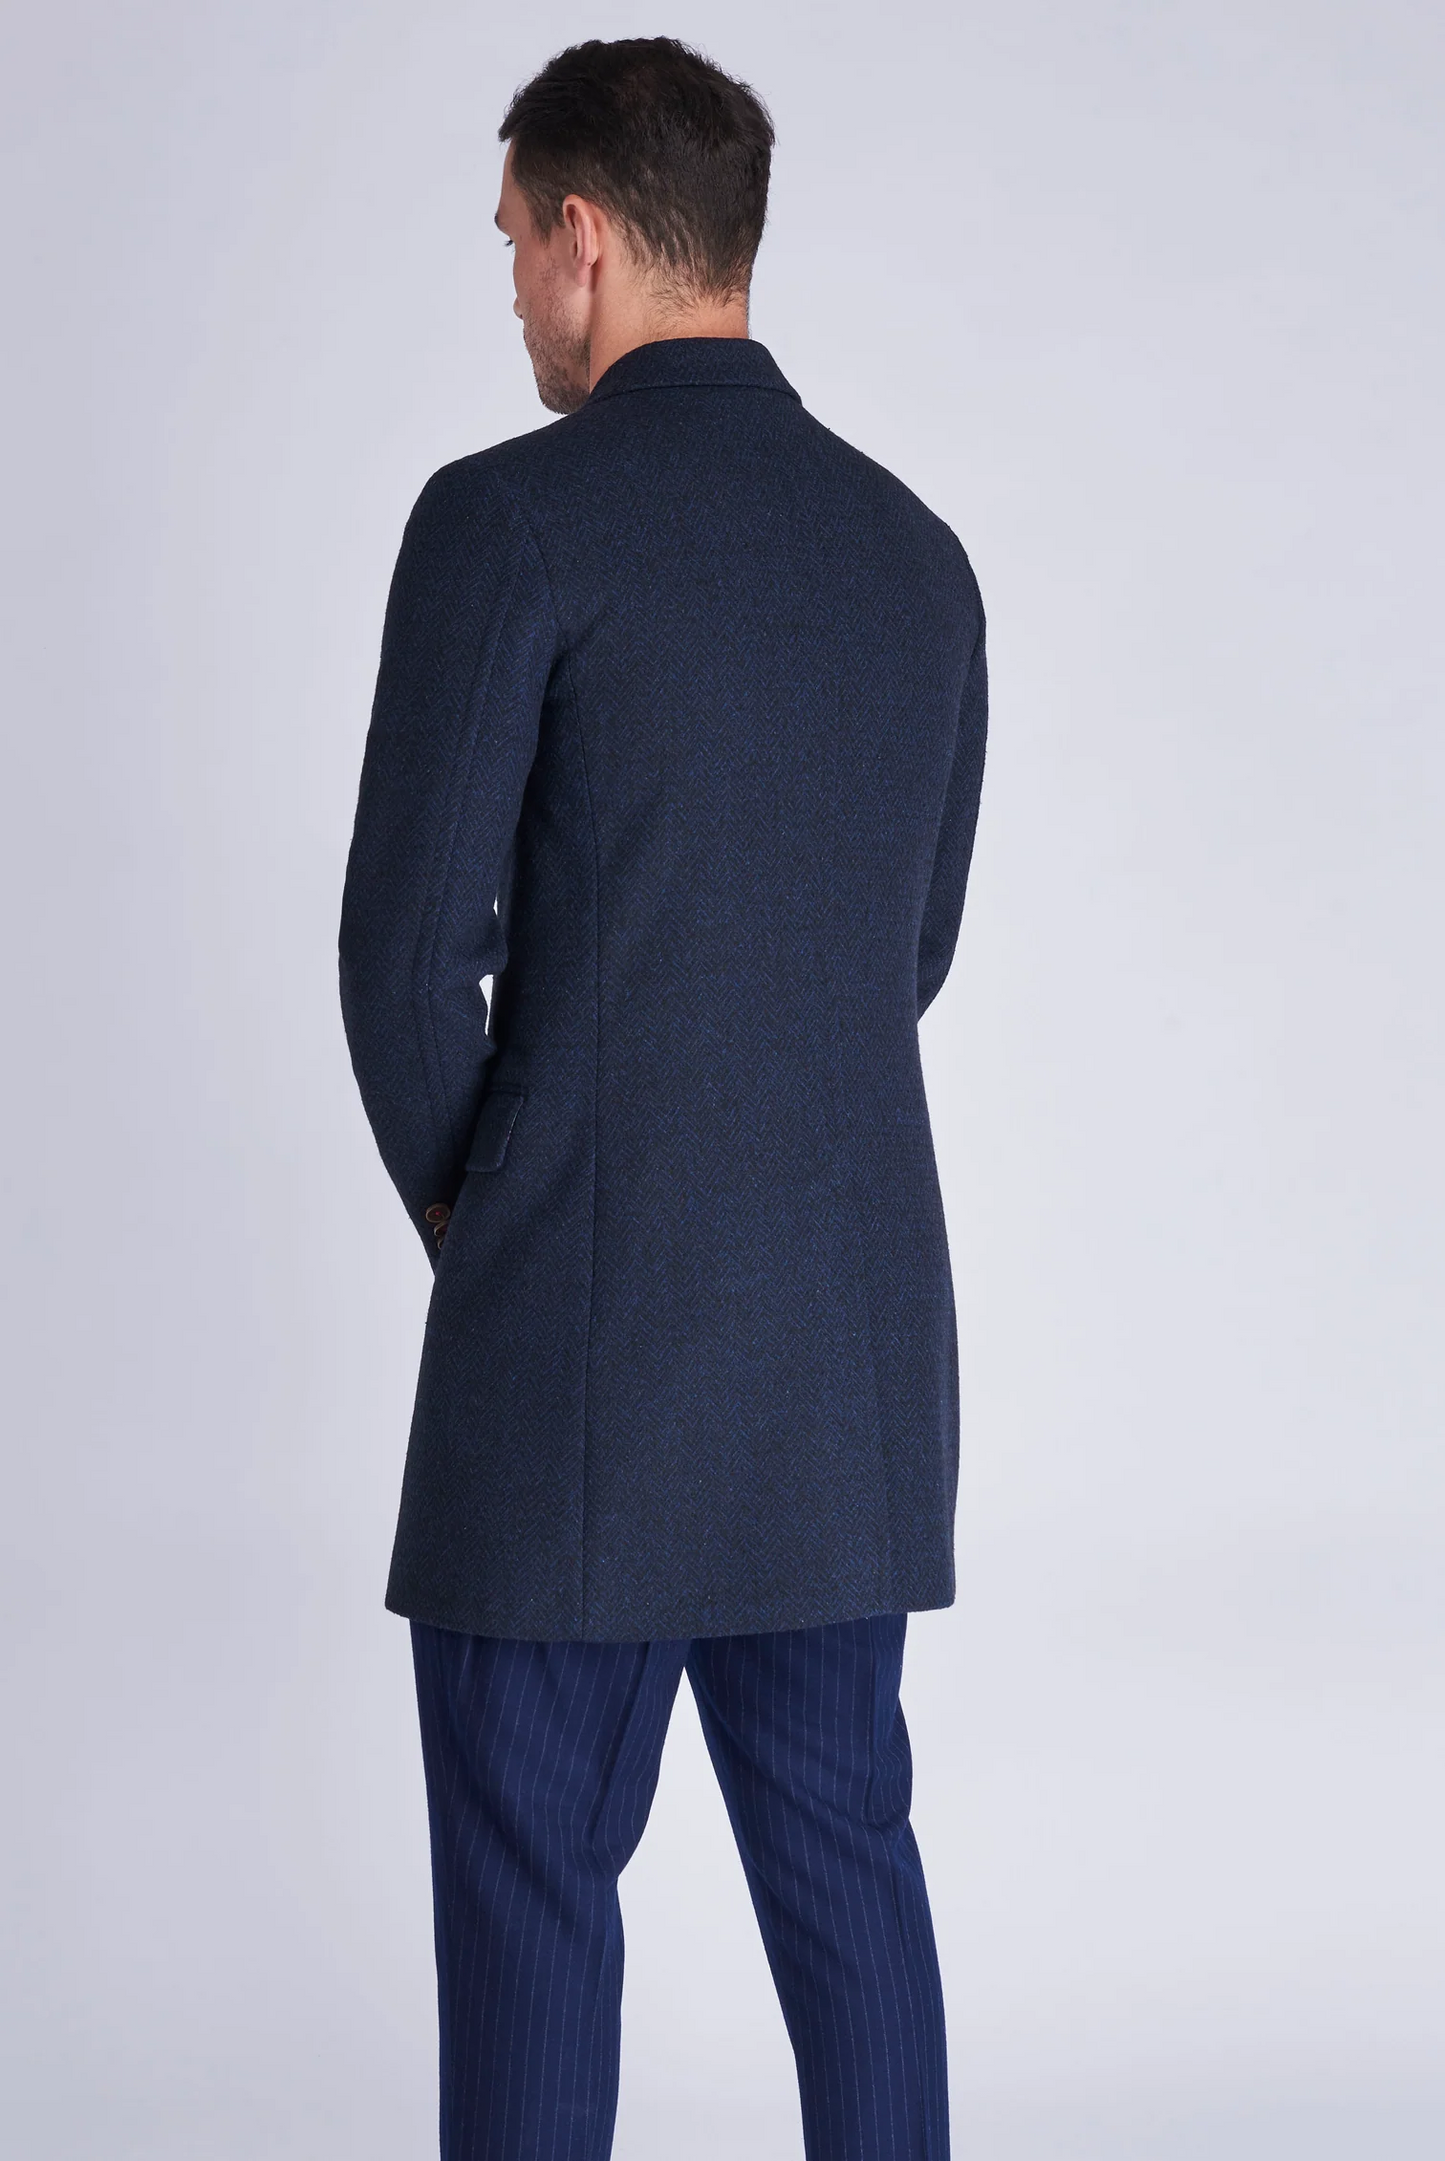 Harry Brown Navy Blue Overcoat Coat Cashmere Wool Formal Covert Winter Mod - Brand New